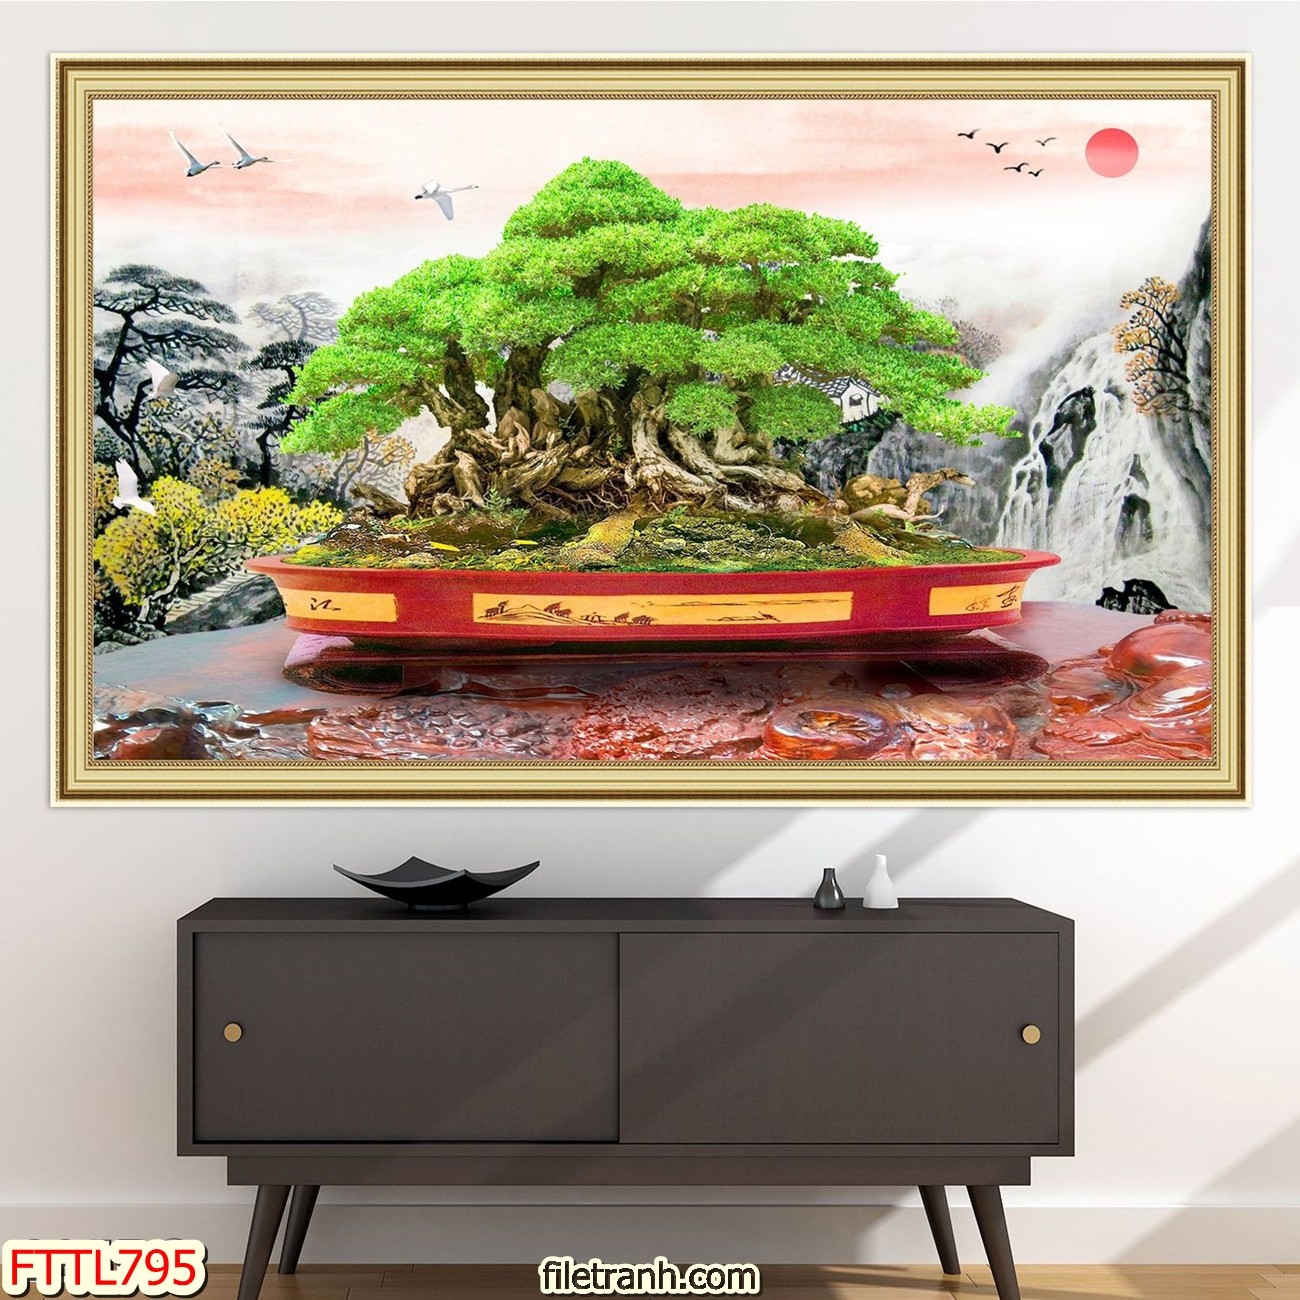 https://filetranh.com/file-tranh-chau-mai-bonsai/file-tranh-chau-mai-bonsai-fttl795.html